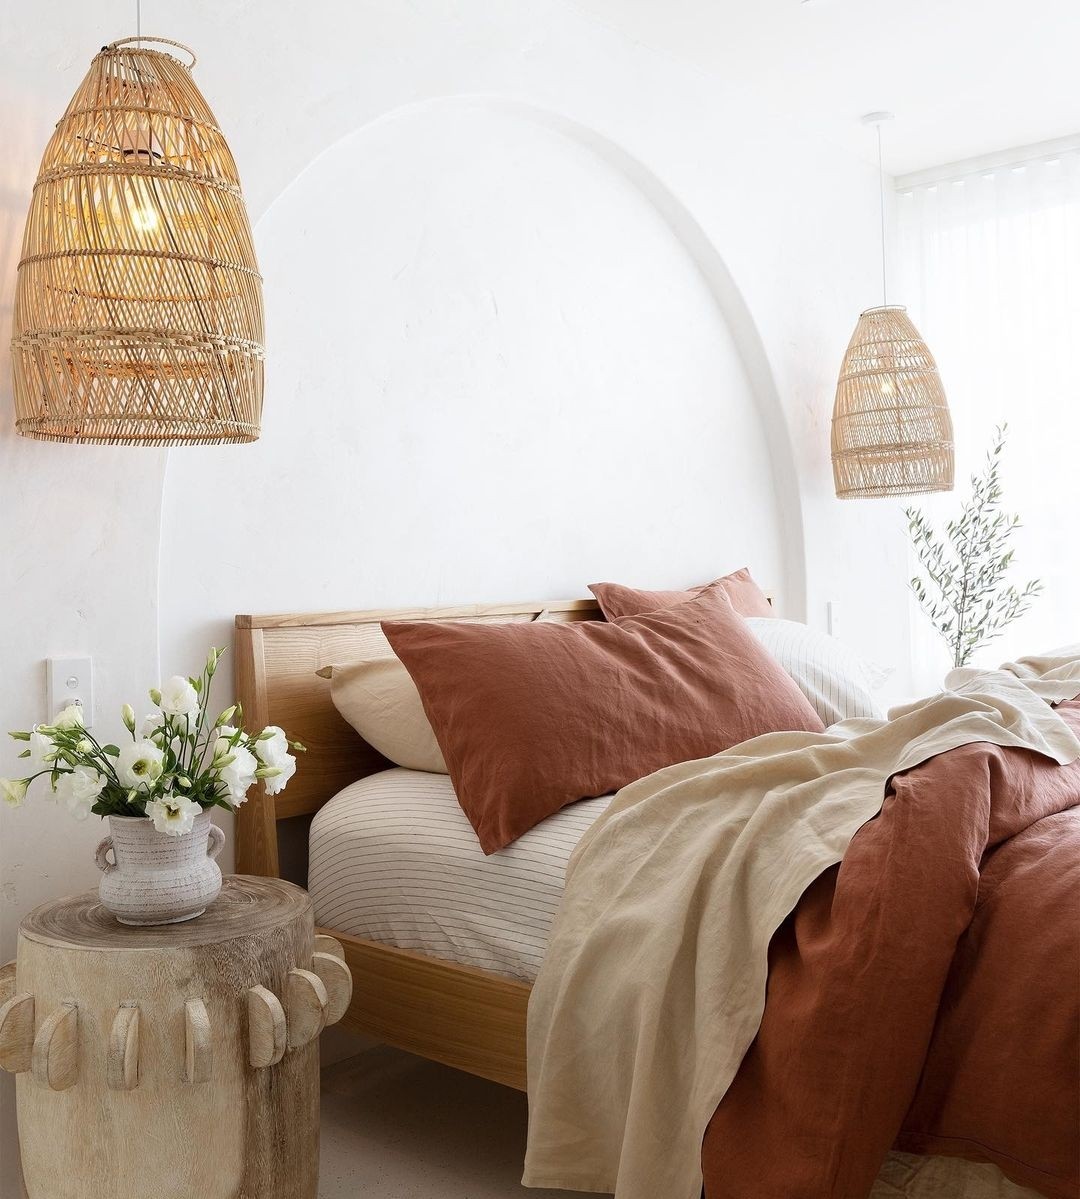 I love linen bedroom with rattan pendant lights